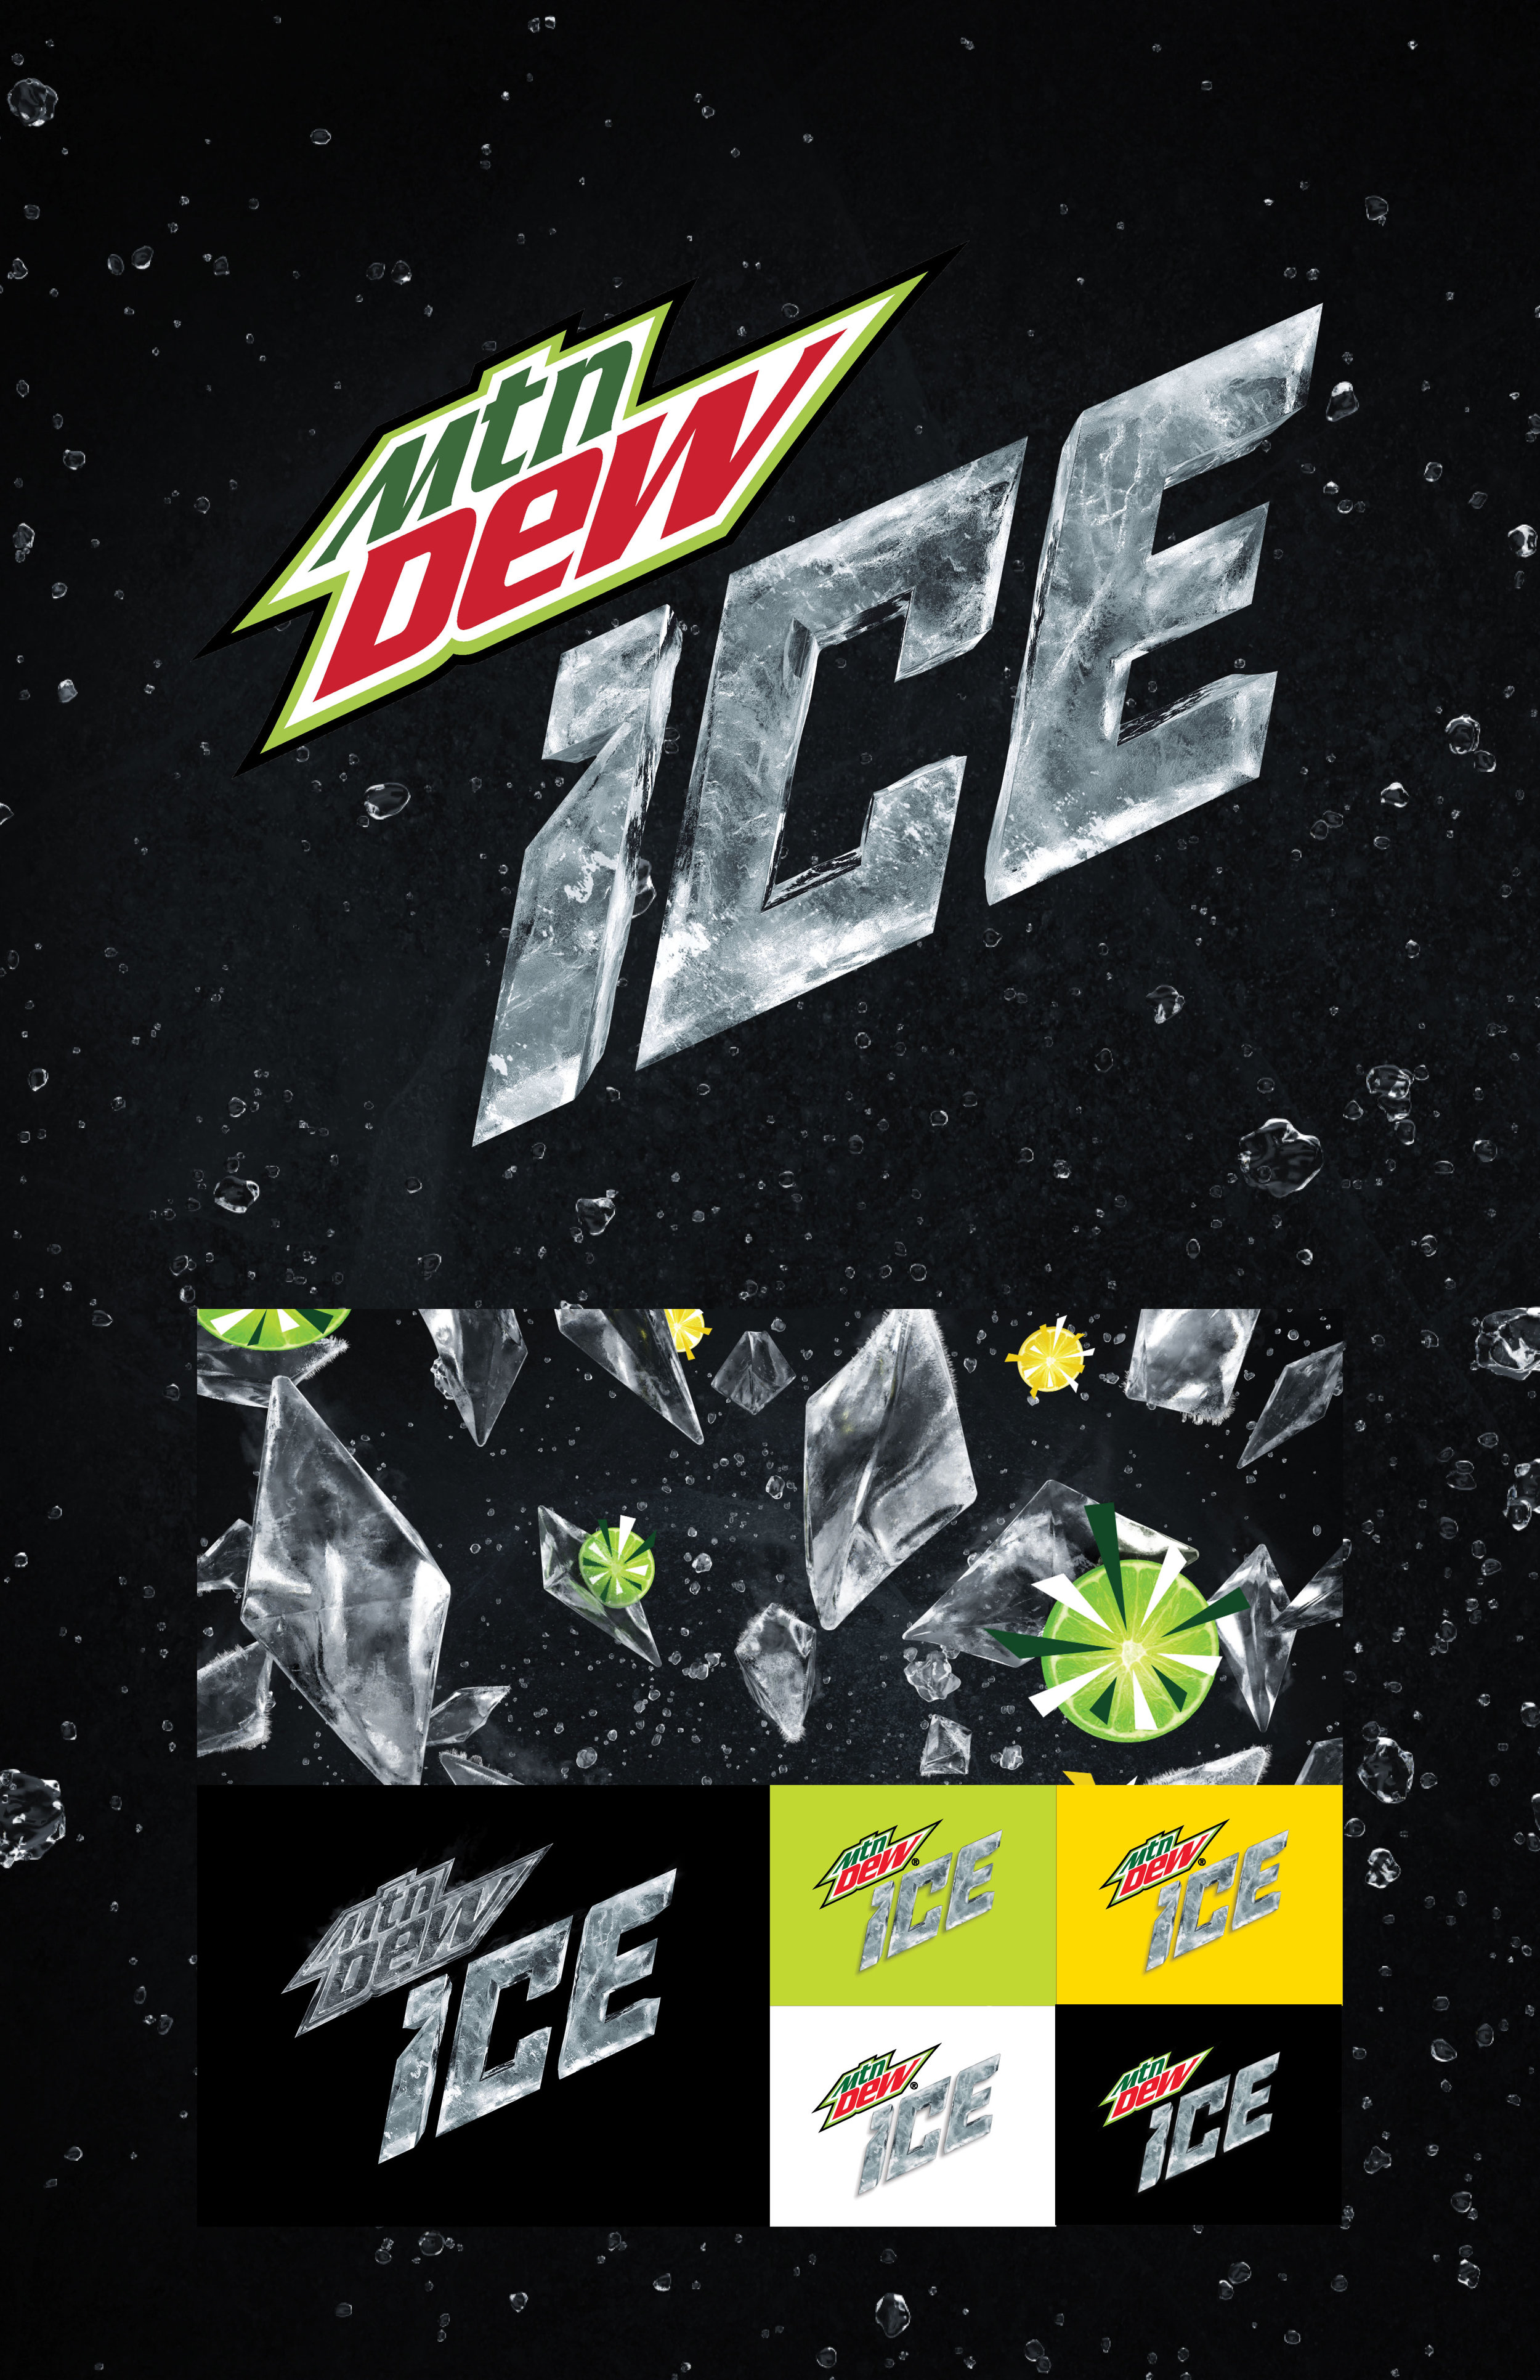 Mountain-dew-Ice-brand-overview3.jpg